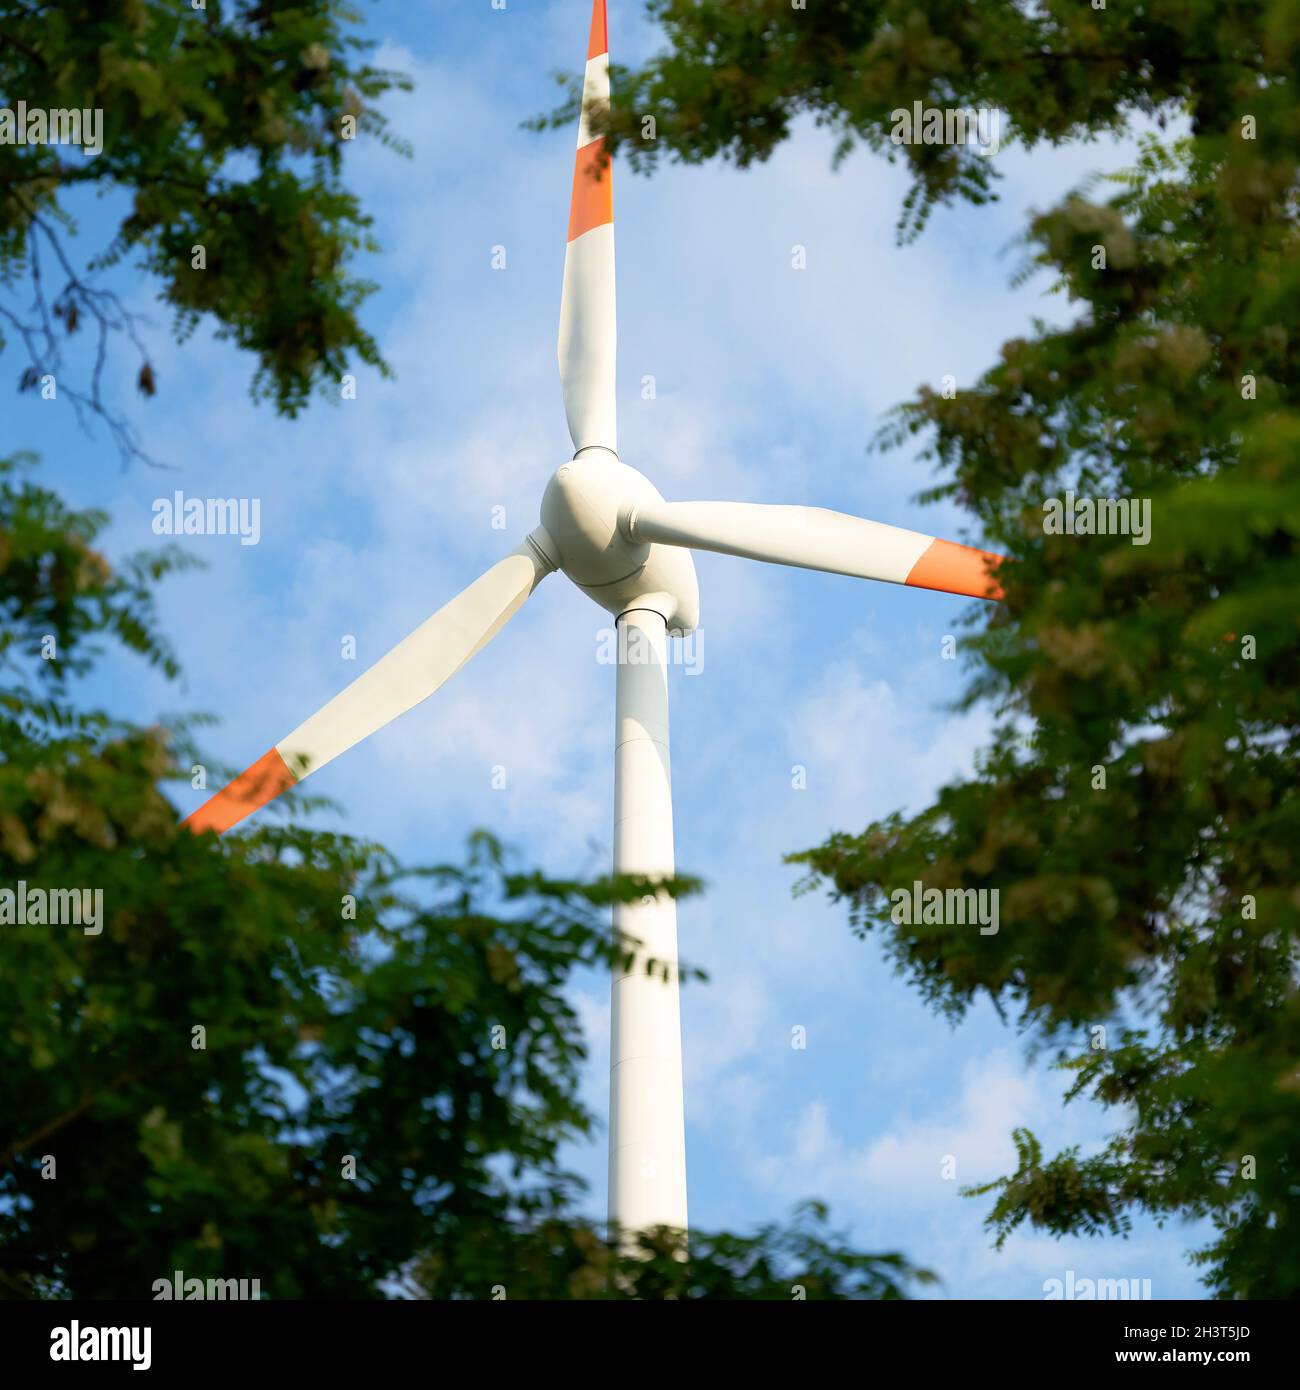 Rotor blades of wind turbine seen through gap between trees Stock Photo